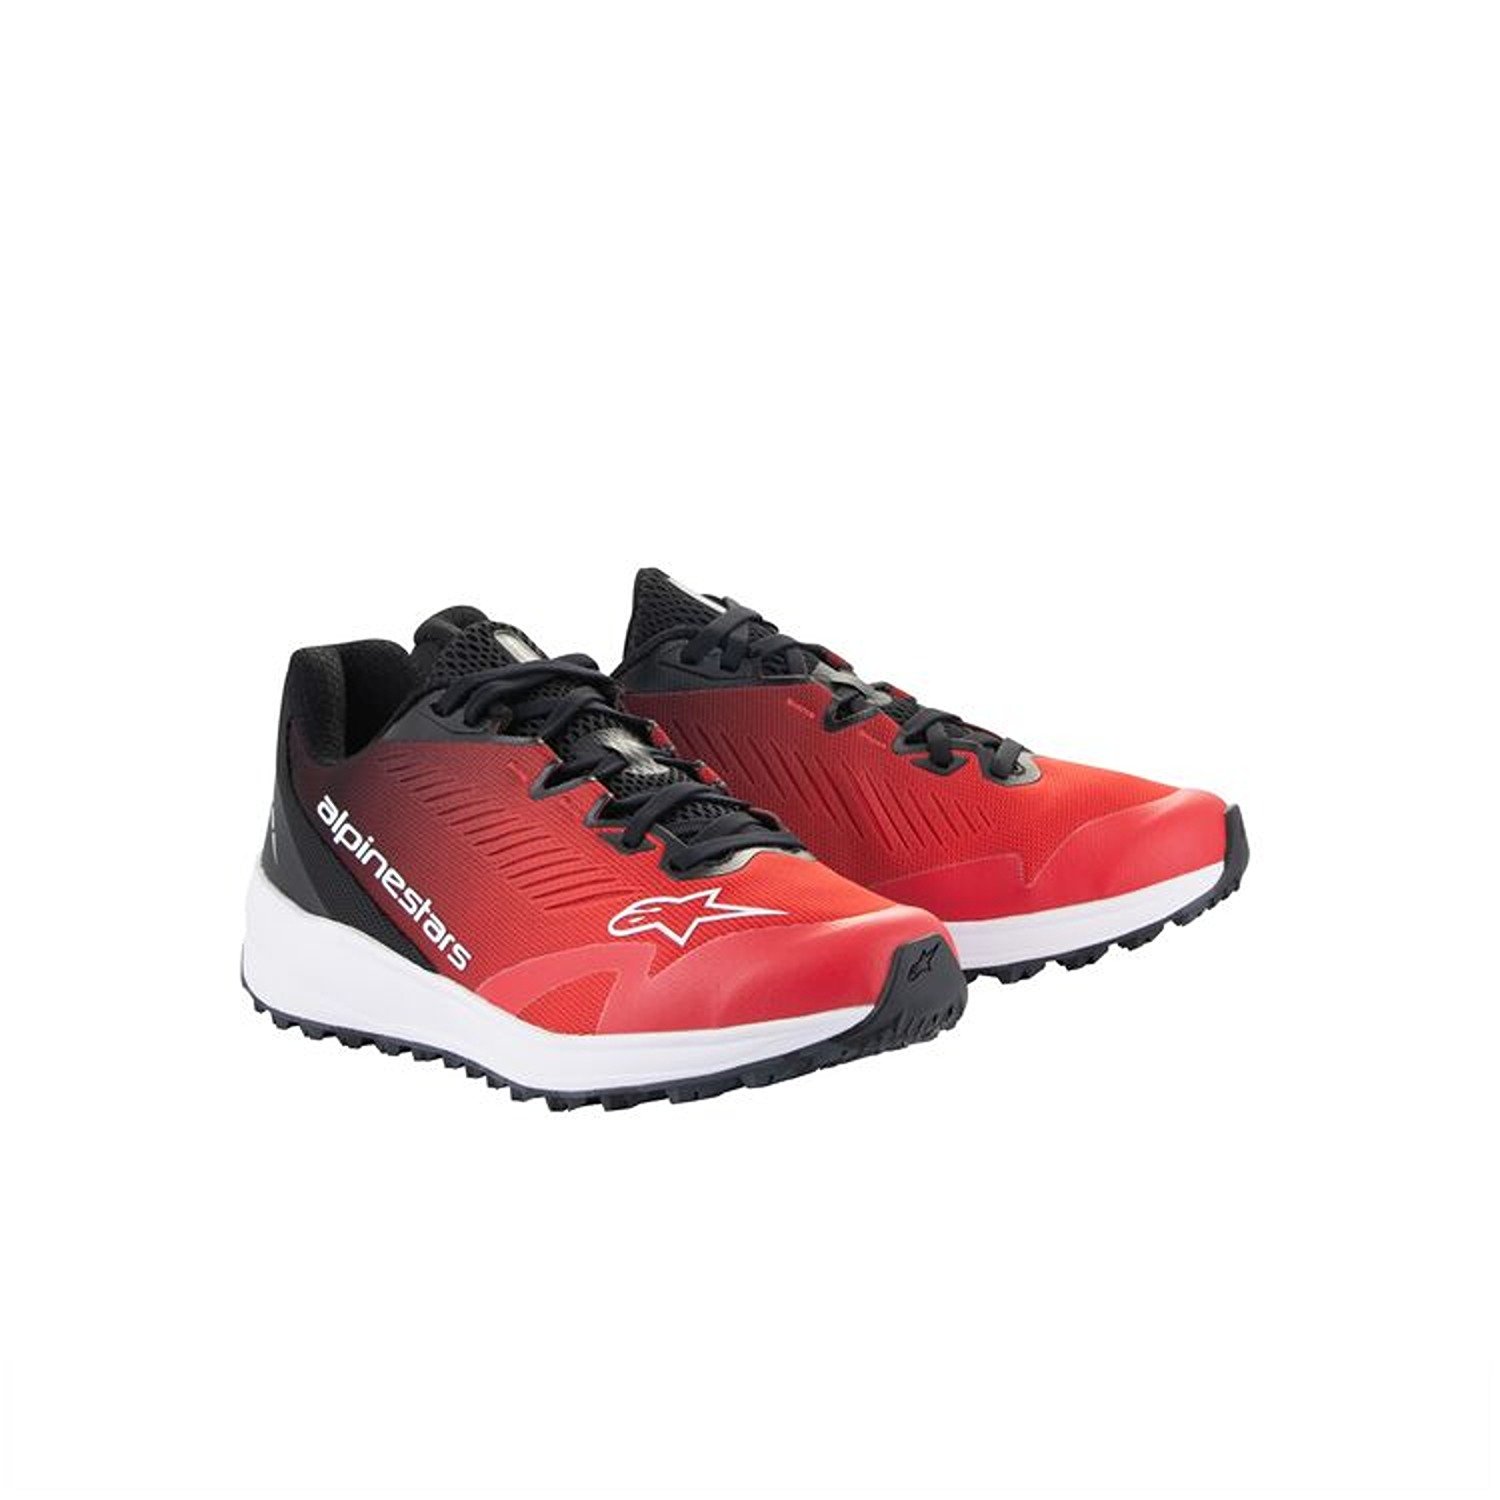 Image of Alpinestars Meta Road V2 Shoes Red Black White Size US 105 EN